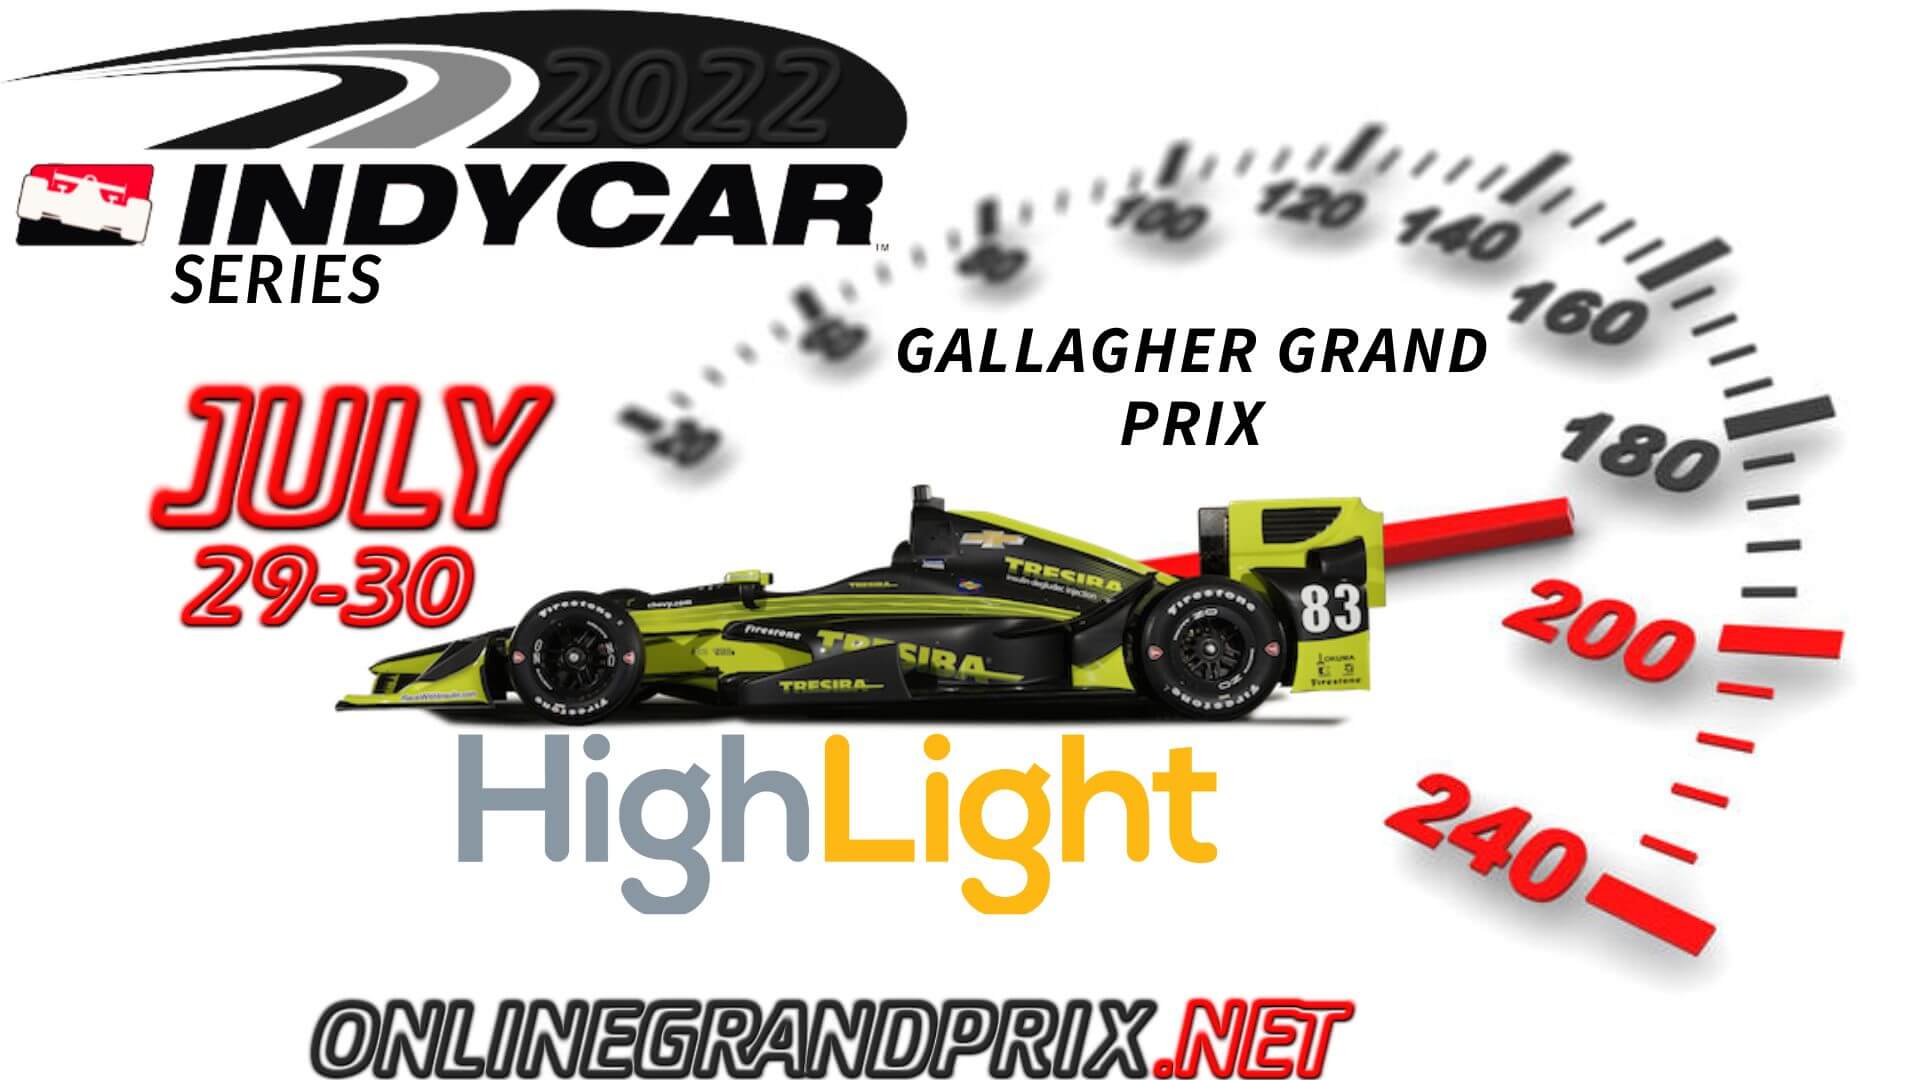 Gallagher Grand Prix Highlights INDYCAR 2022